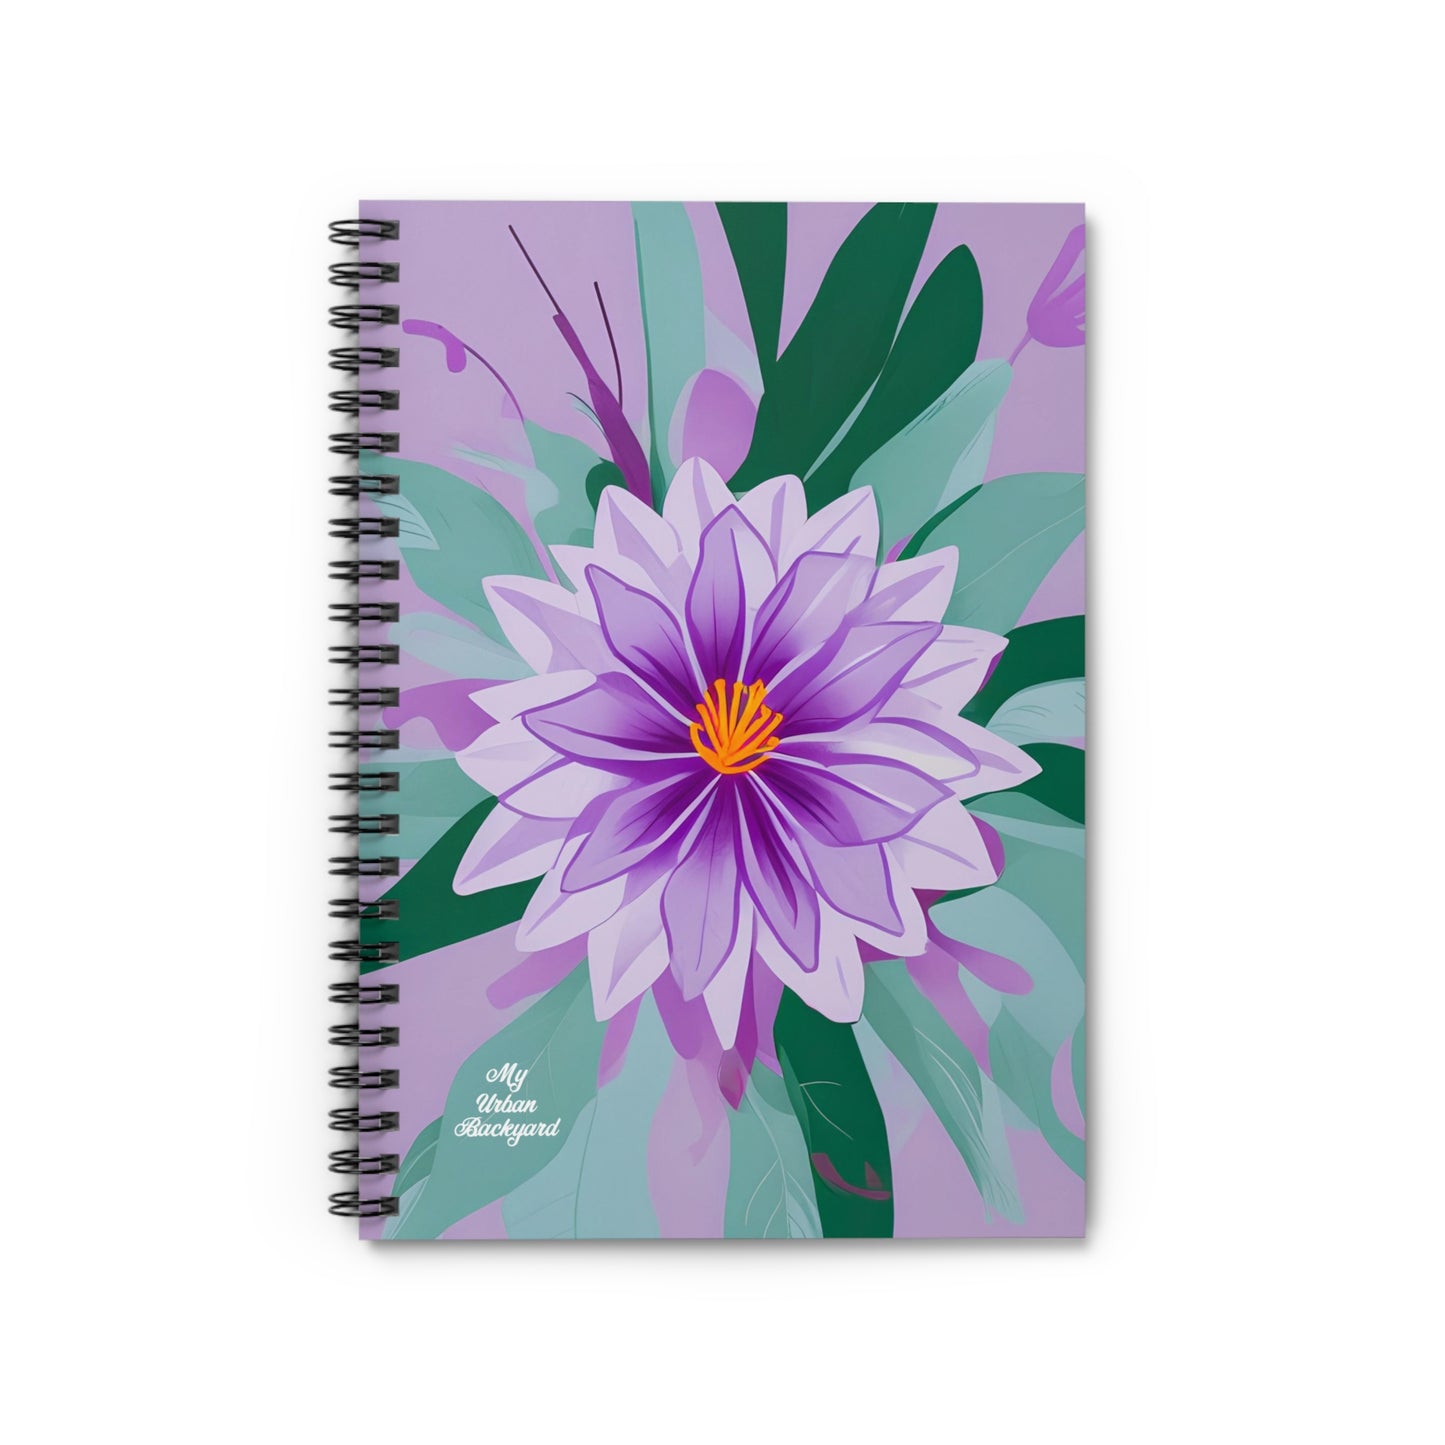 Purple Flower, Spiral Notebook Journal - Write in Style